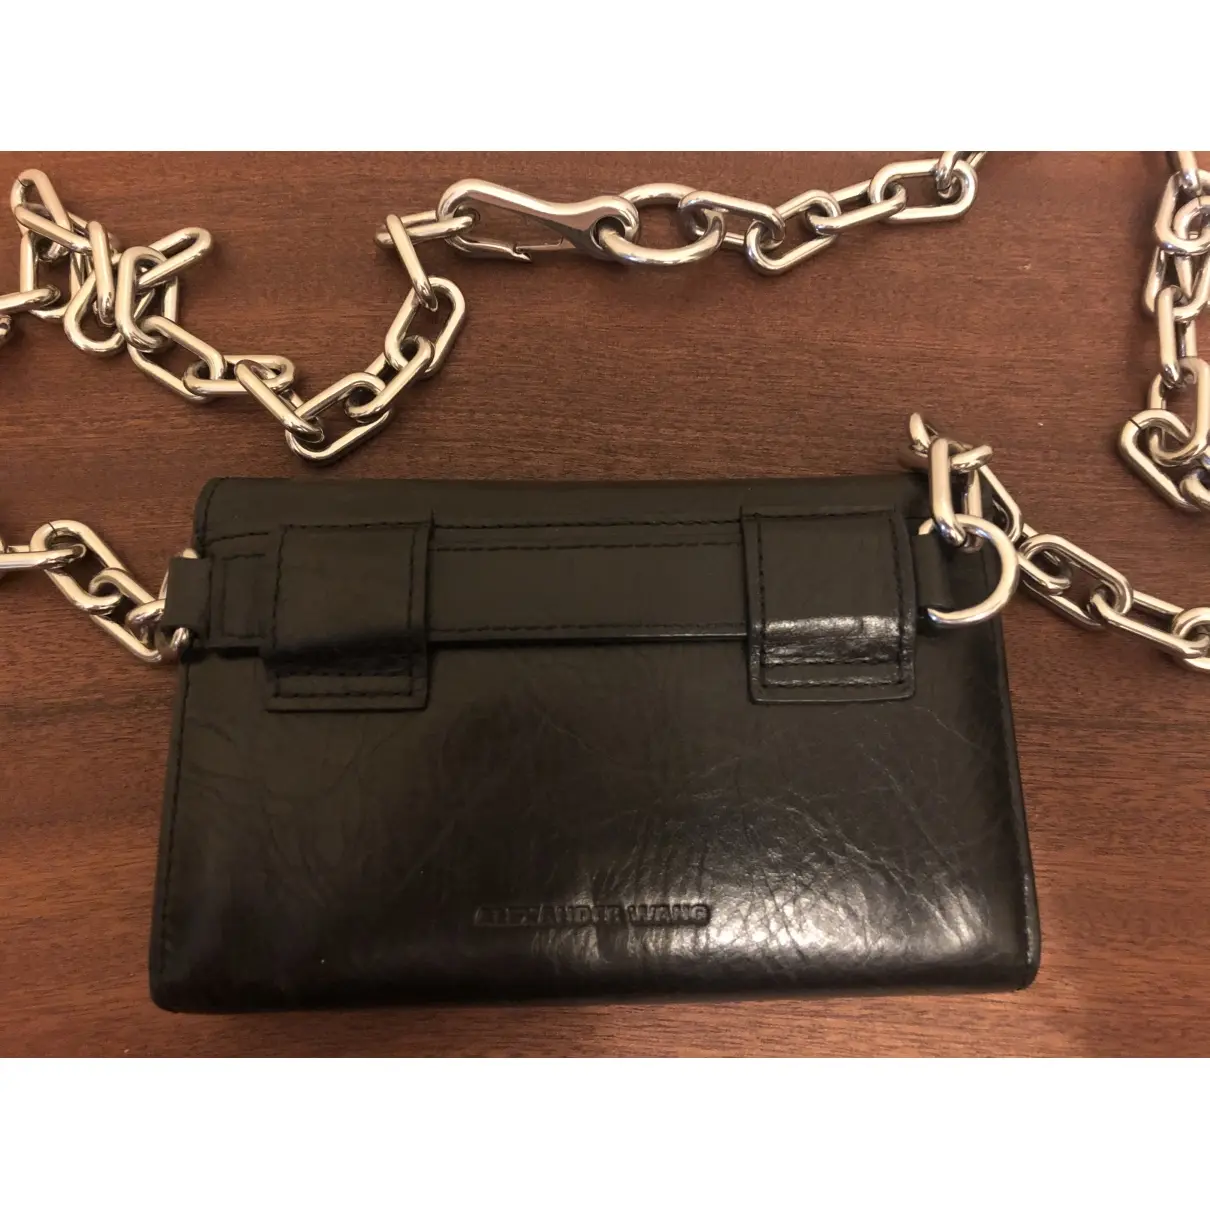 Buy Alexander Wang Leather clutch bag online